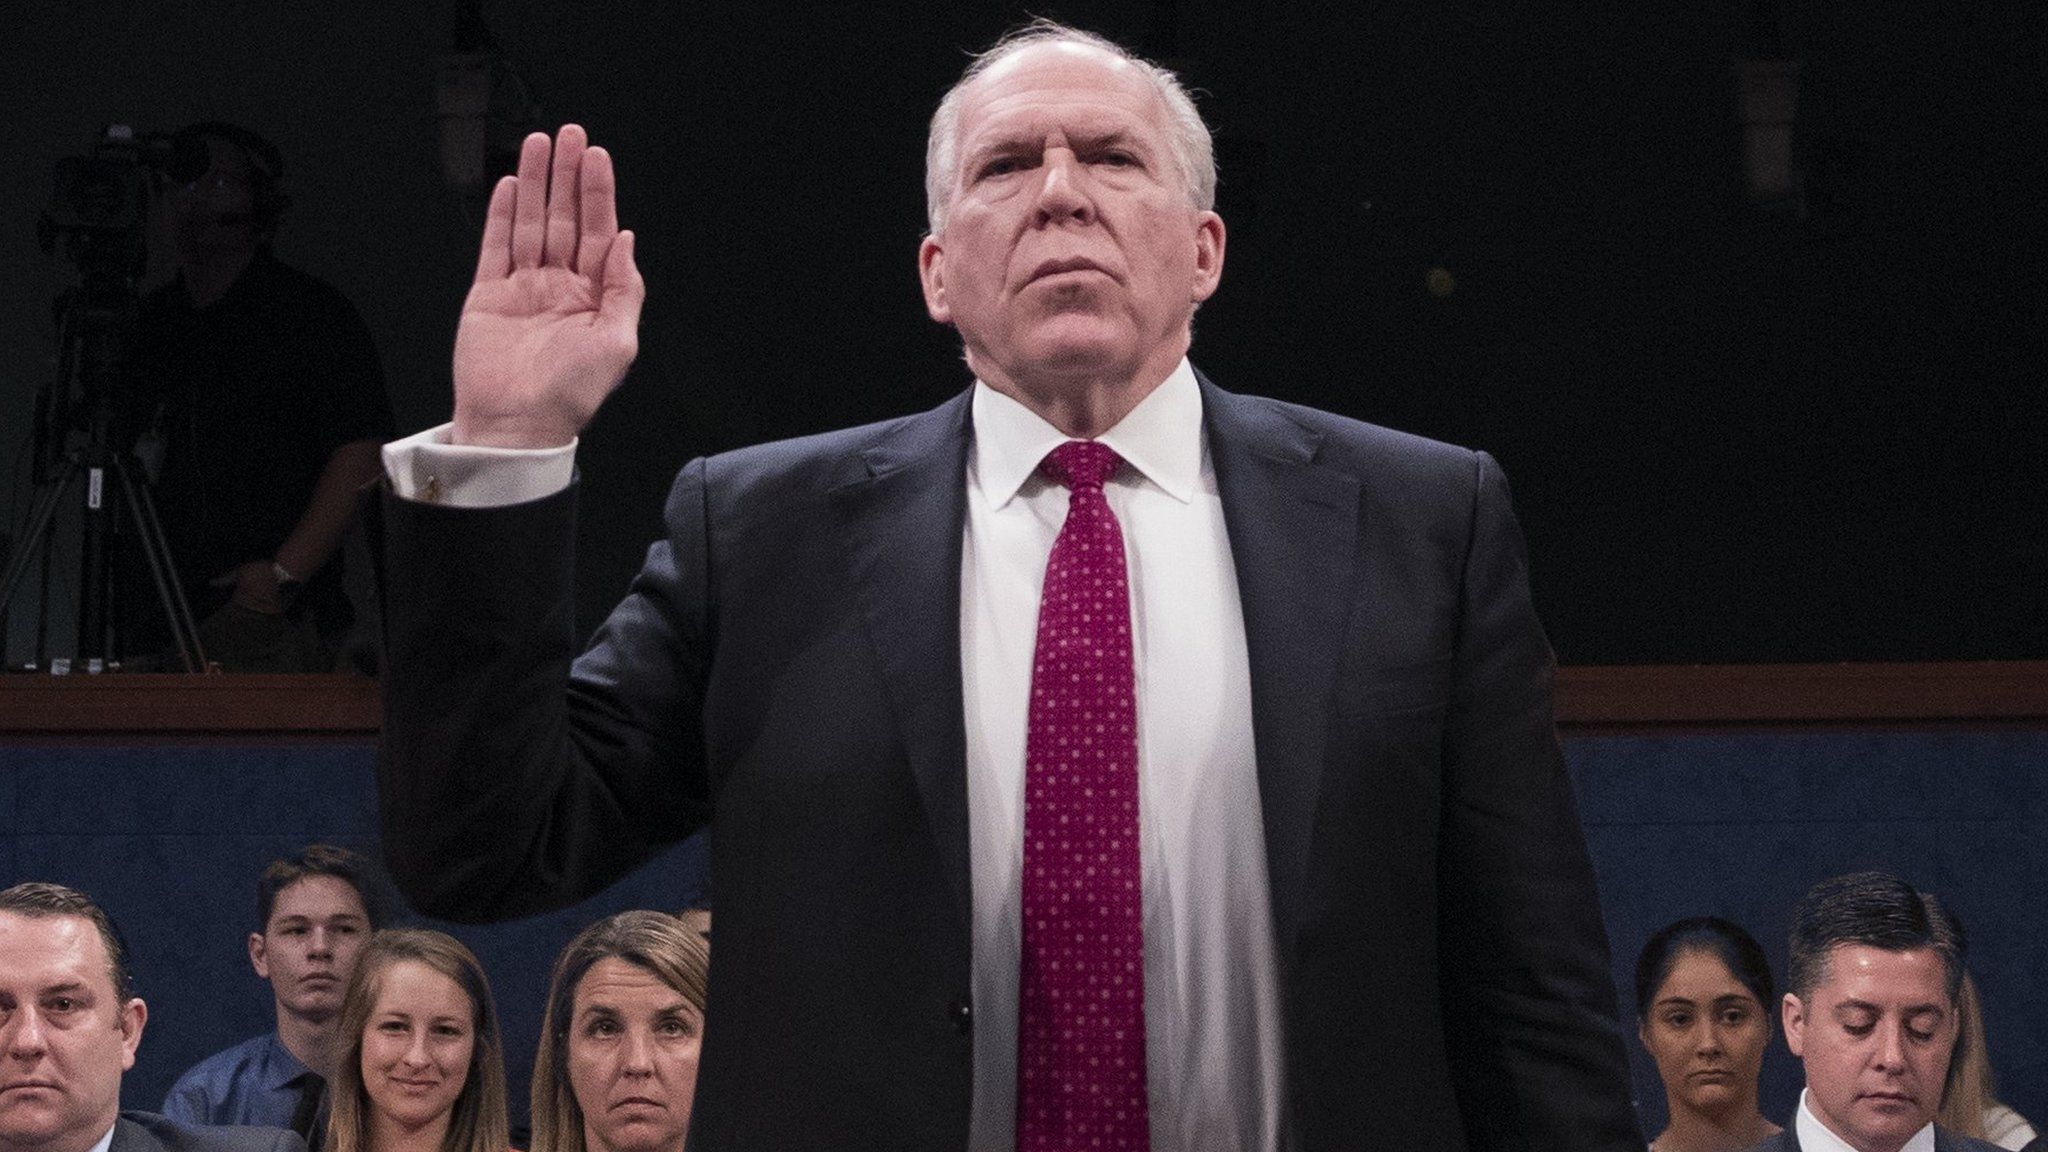 Former CIA Director John Brennan is sworn in